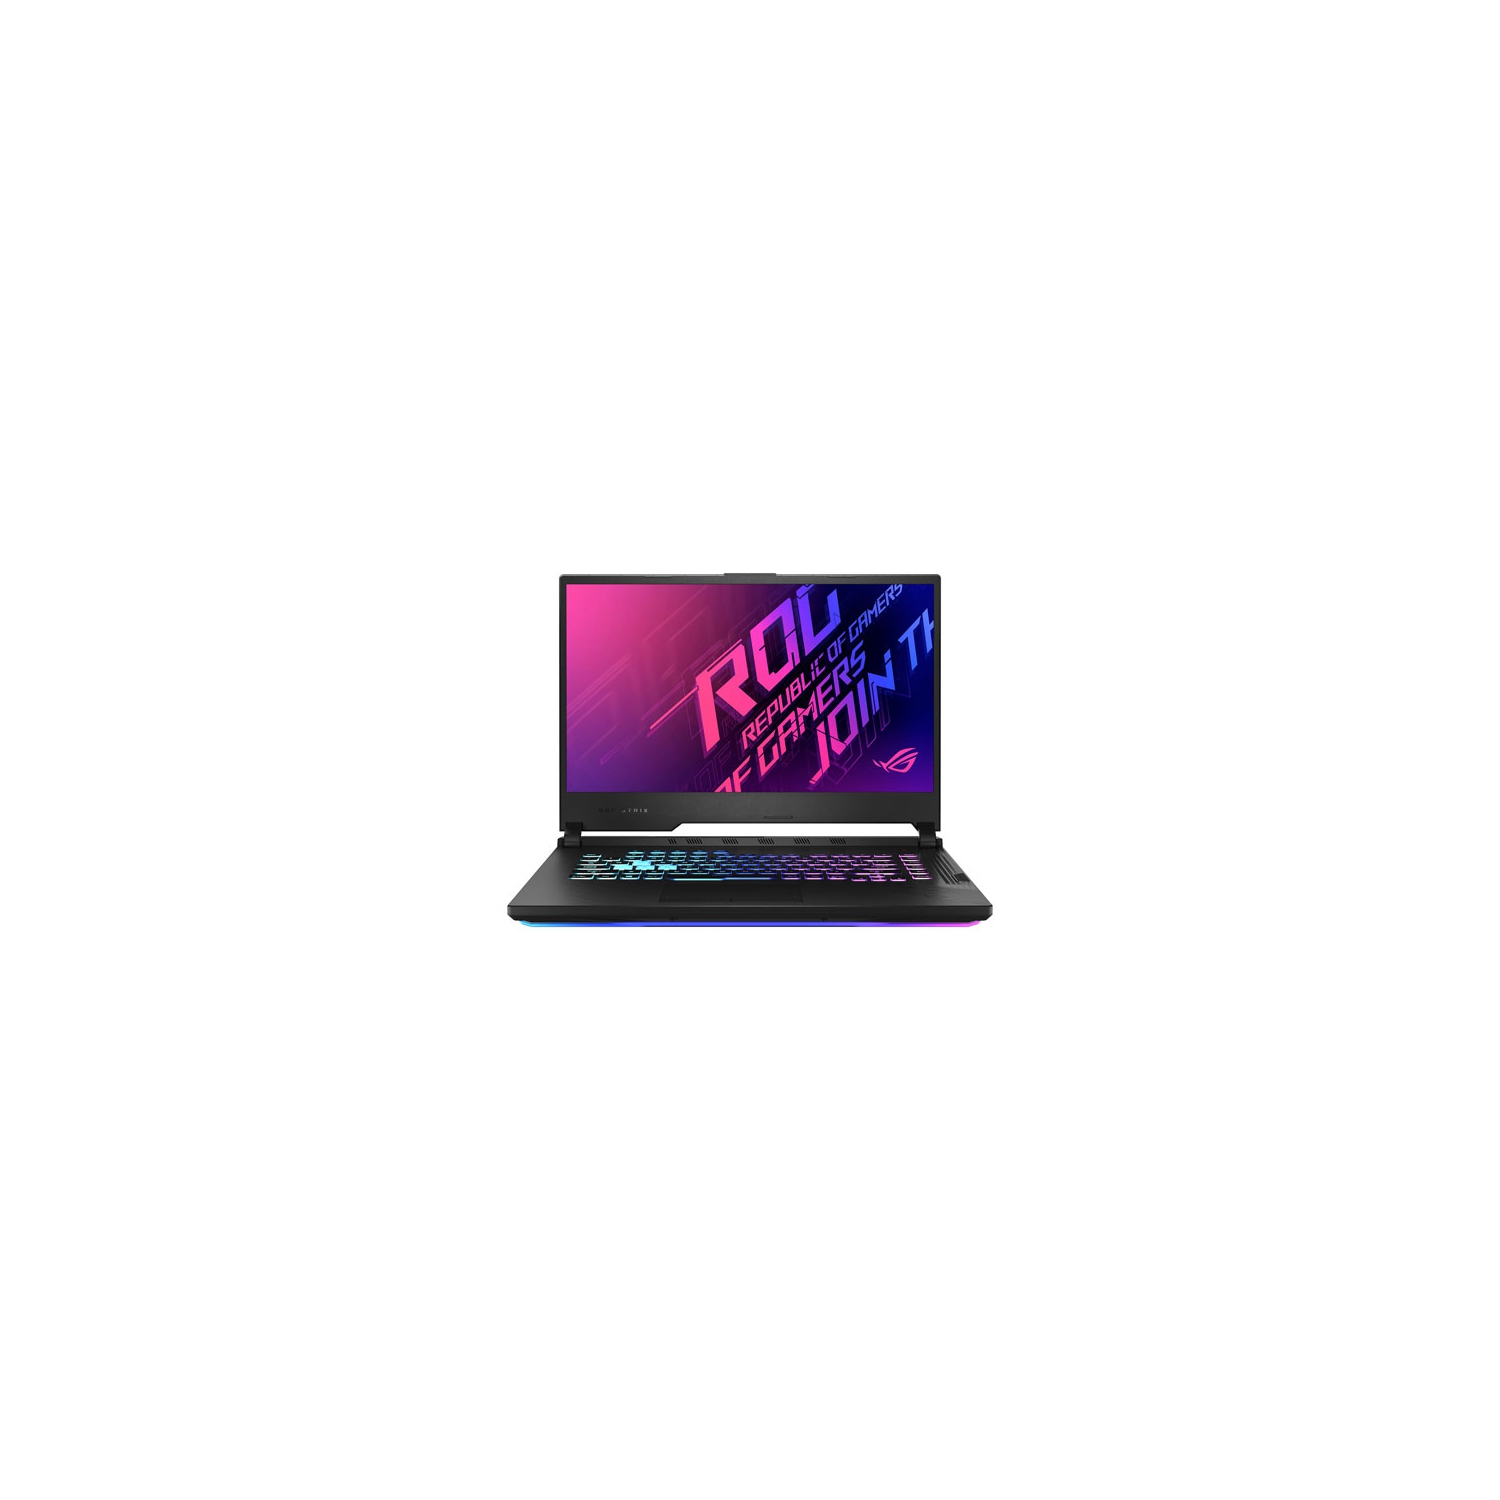 ASUS ROG Strix G15 15.6" Gaming Laptop (Intel Core i7-10750H/512GB SSD/16GB RAM/GeForce GTX 1650 Ti) - Open Box